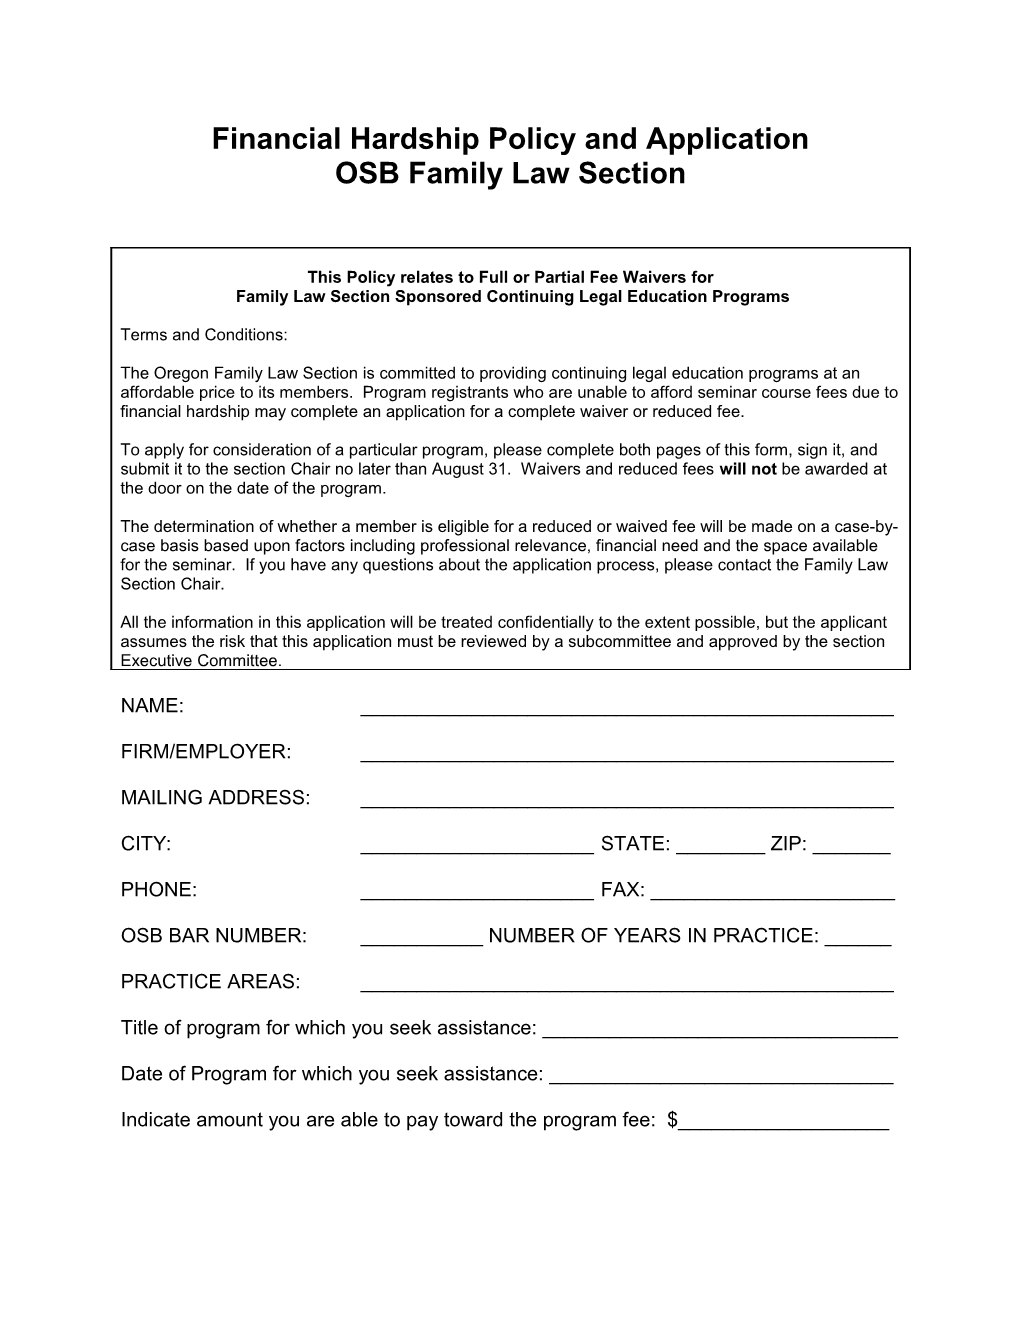 Oregon State Bar Financial Hardship Policy (00521049)